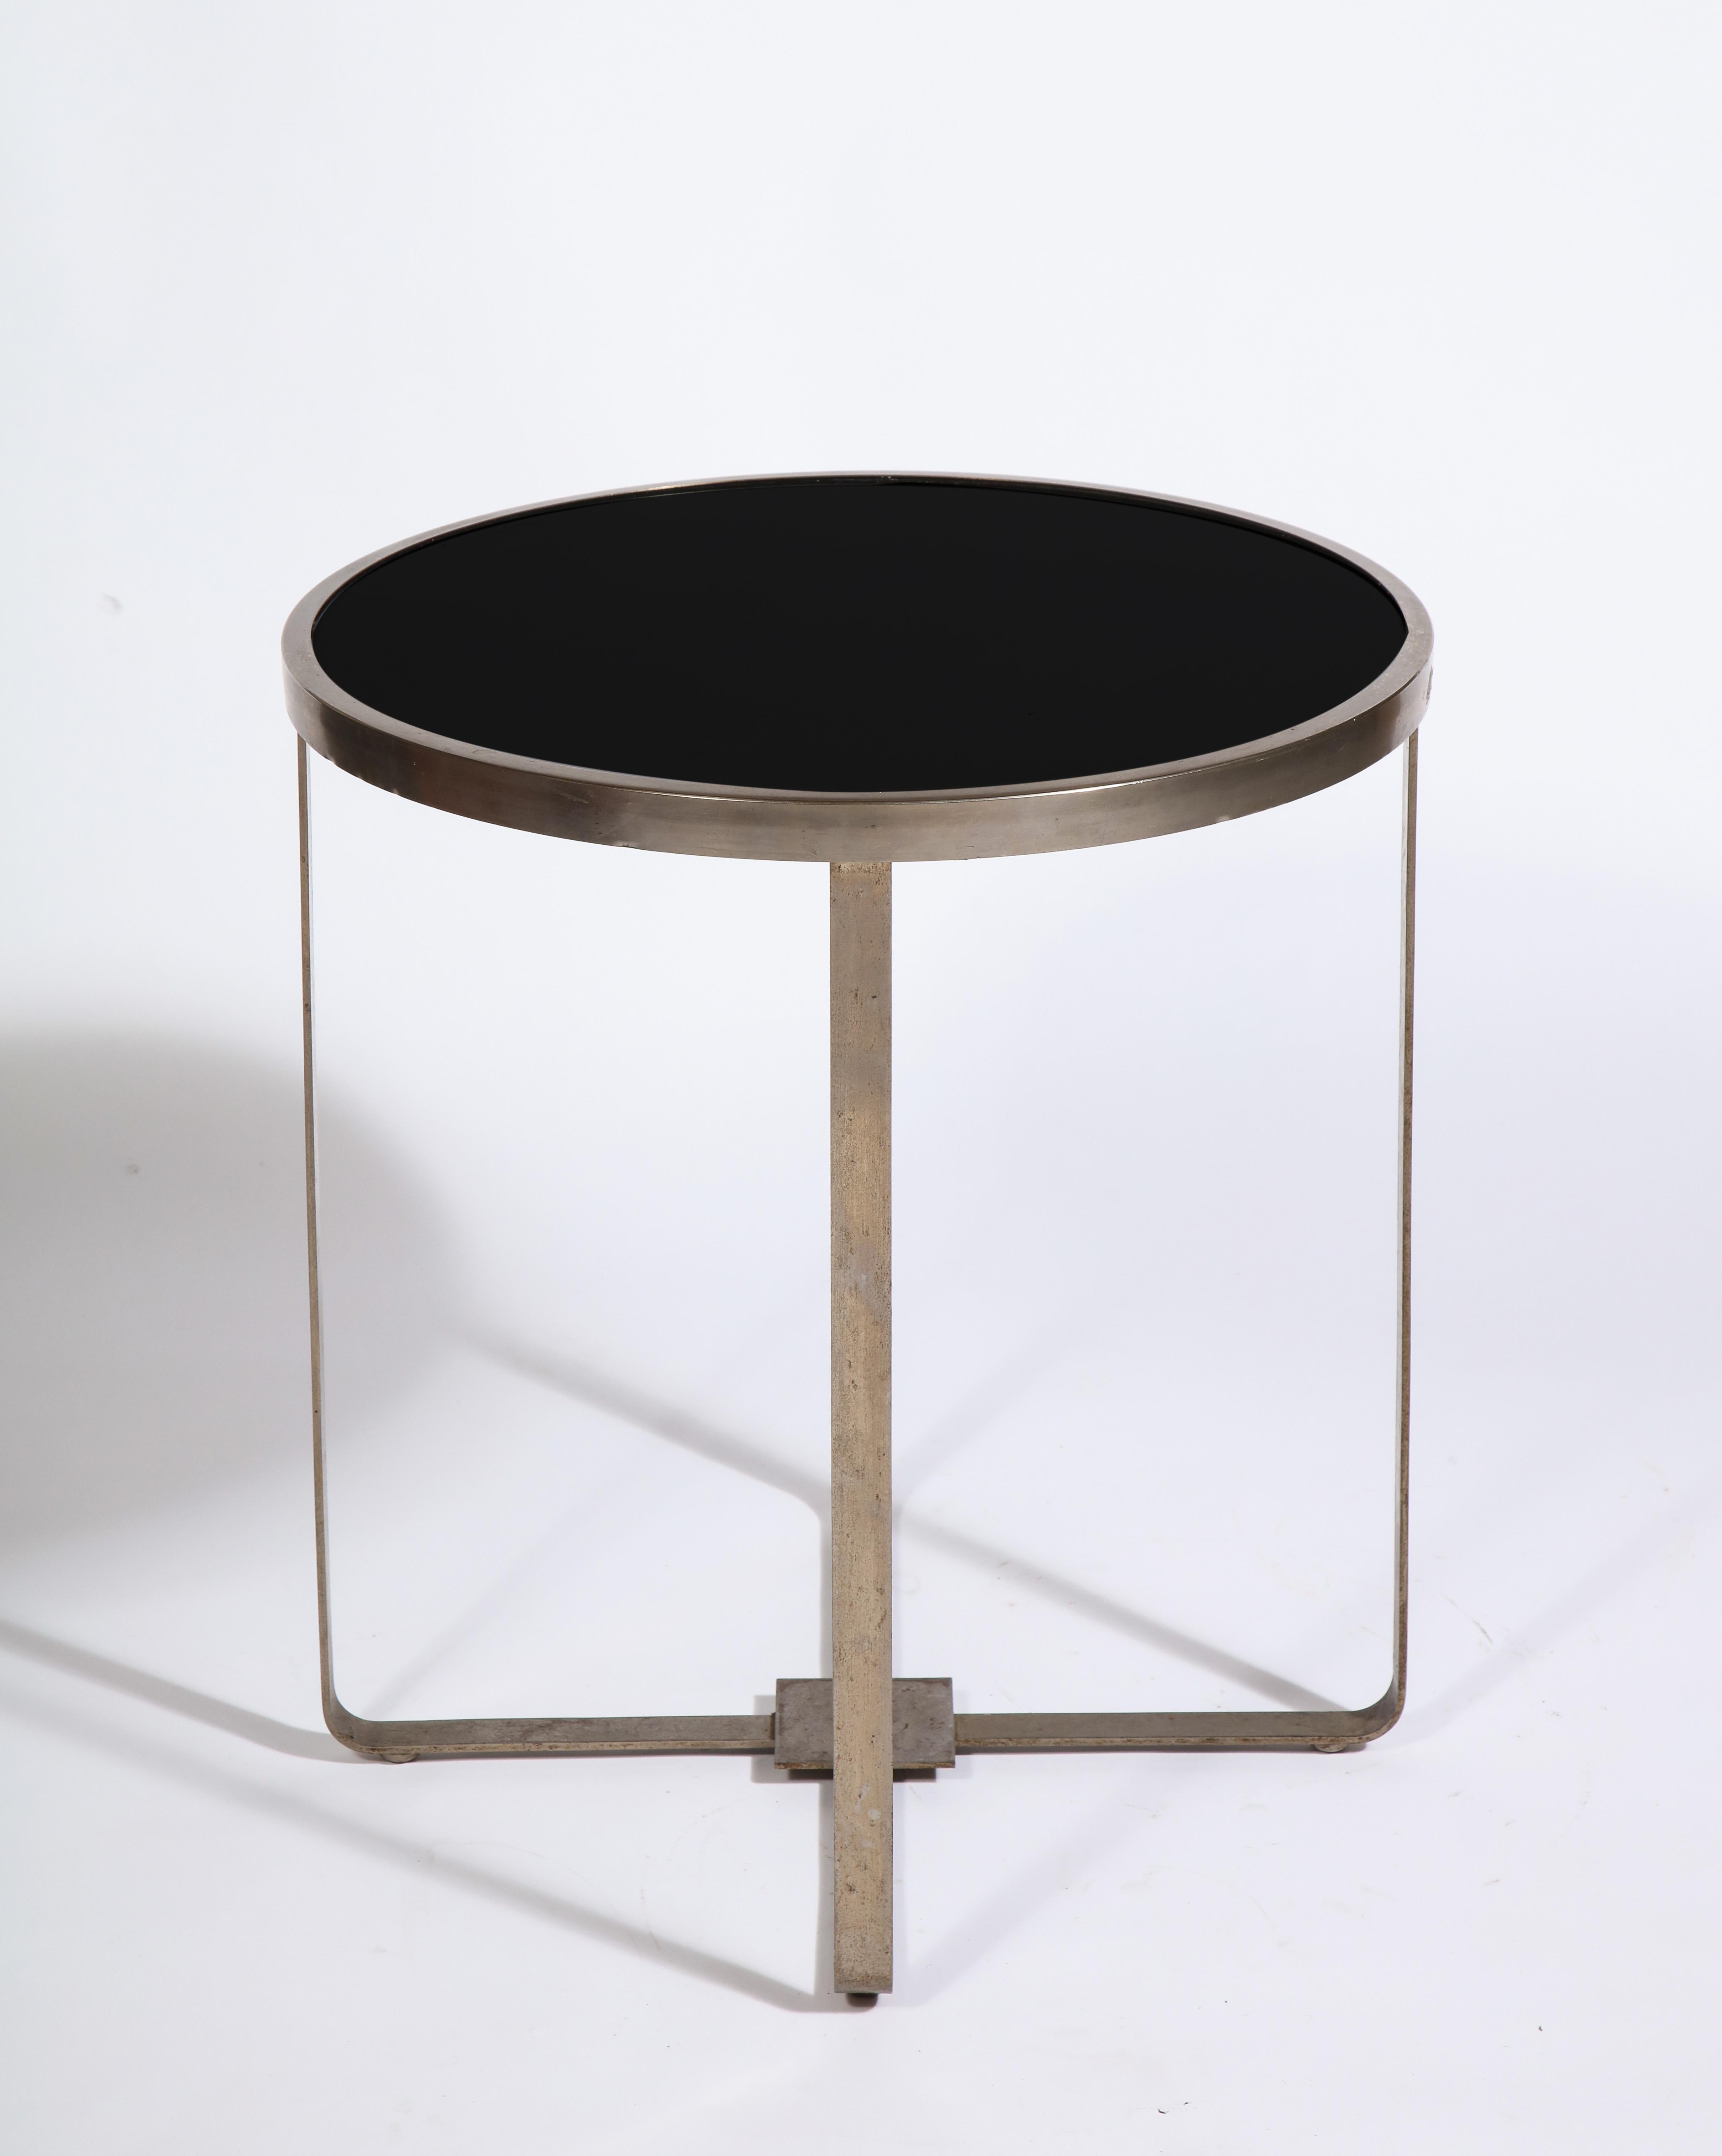 Modernist Art Deco Adnet Attr. Steel Round Black Glass Table, France, 1930s For Sale 2